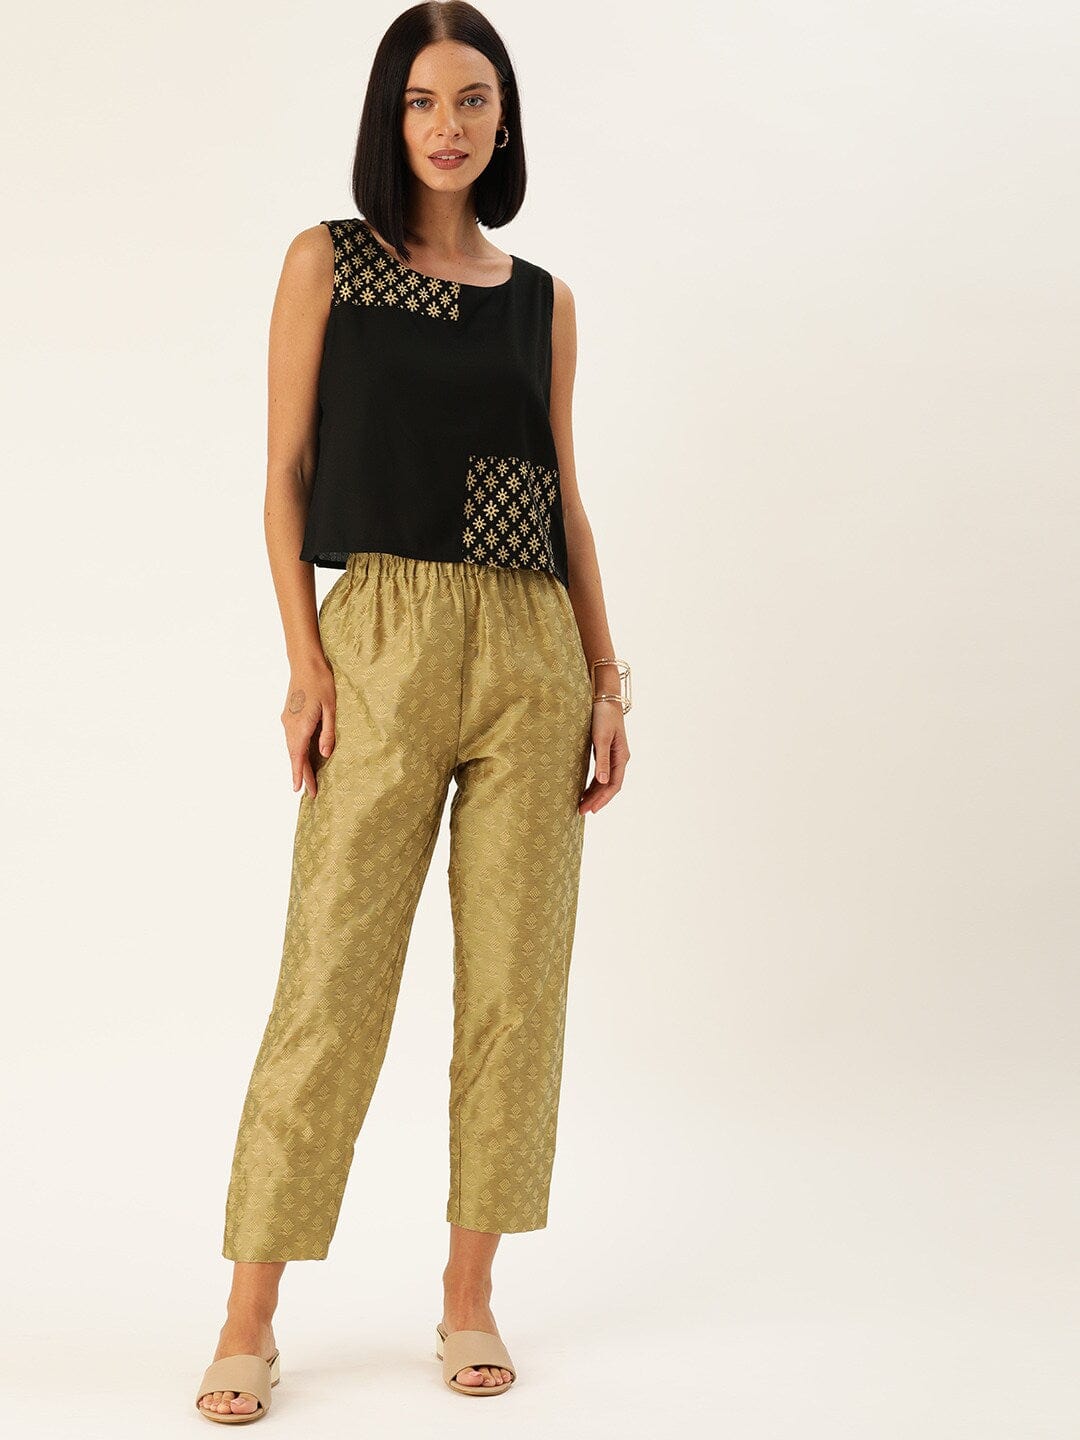 Women's Black & Gold-Toned Printed Top with Trousers - Varanga